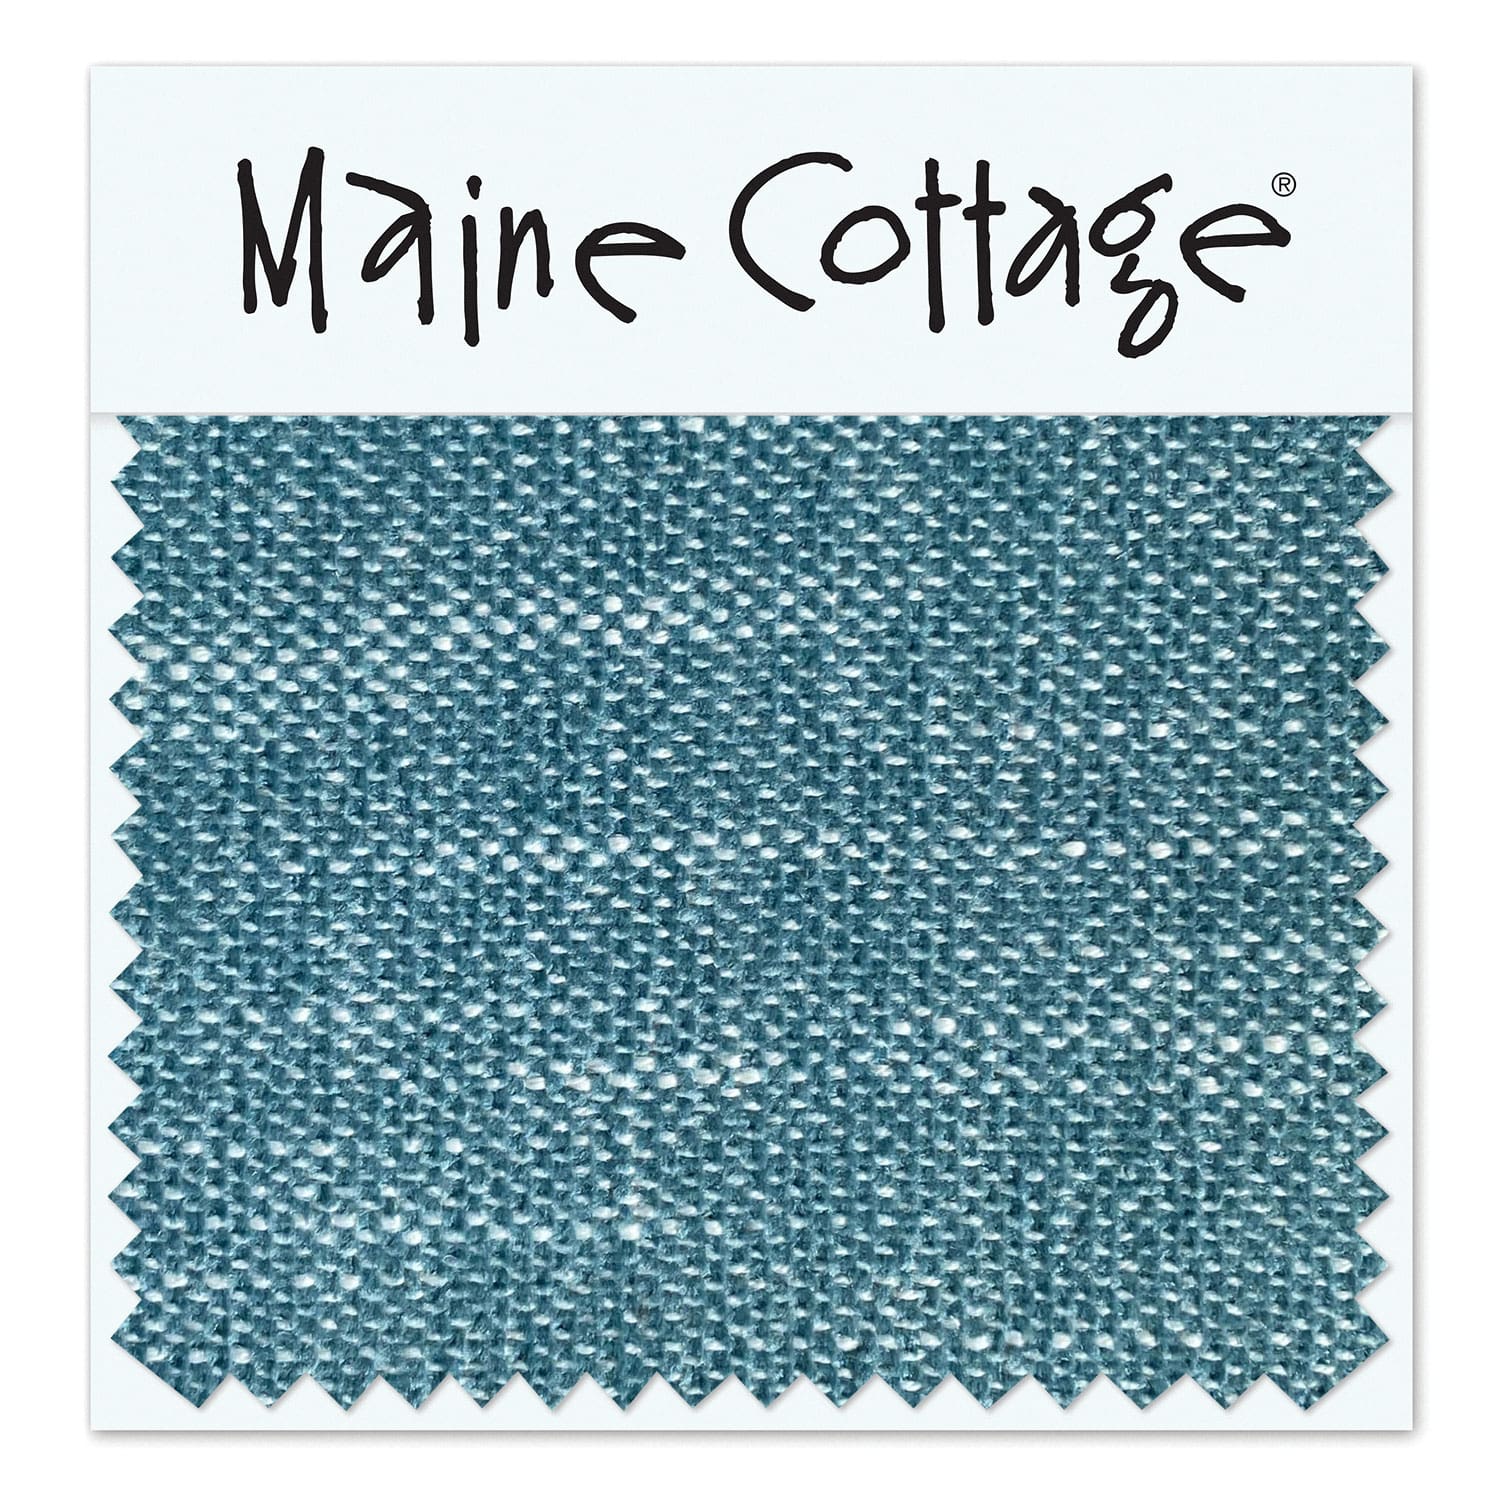 Maine Cottage Plain Jane: Bluestone Fabric Sample | Maine Cottage® 